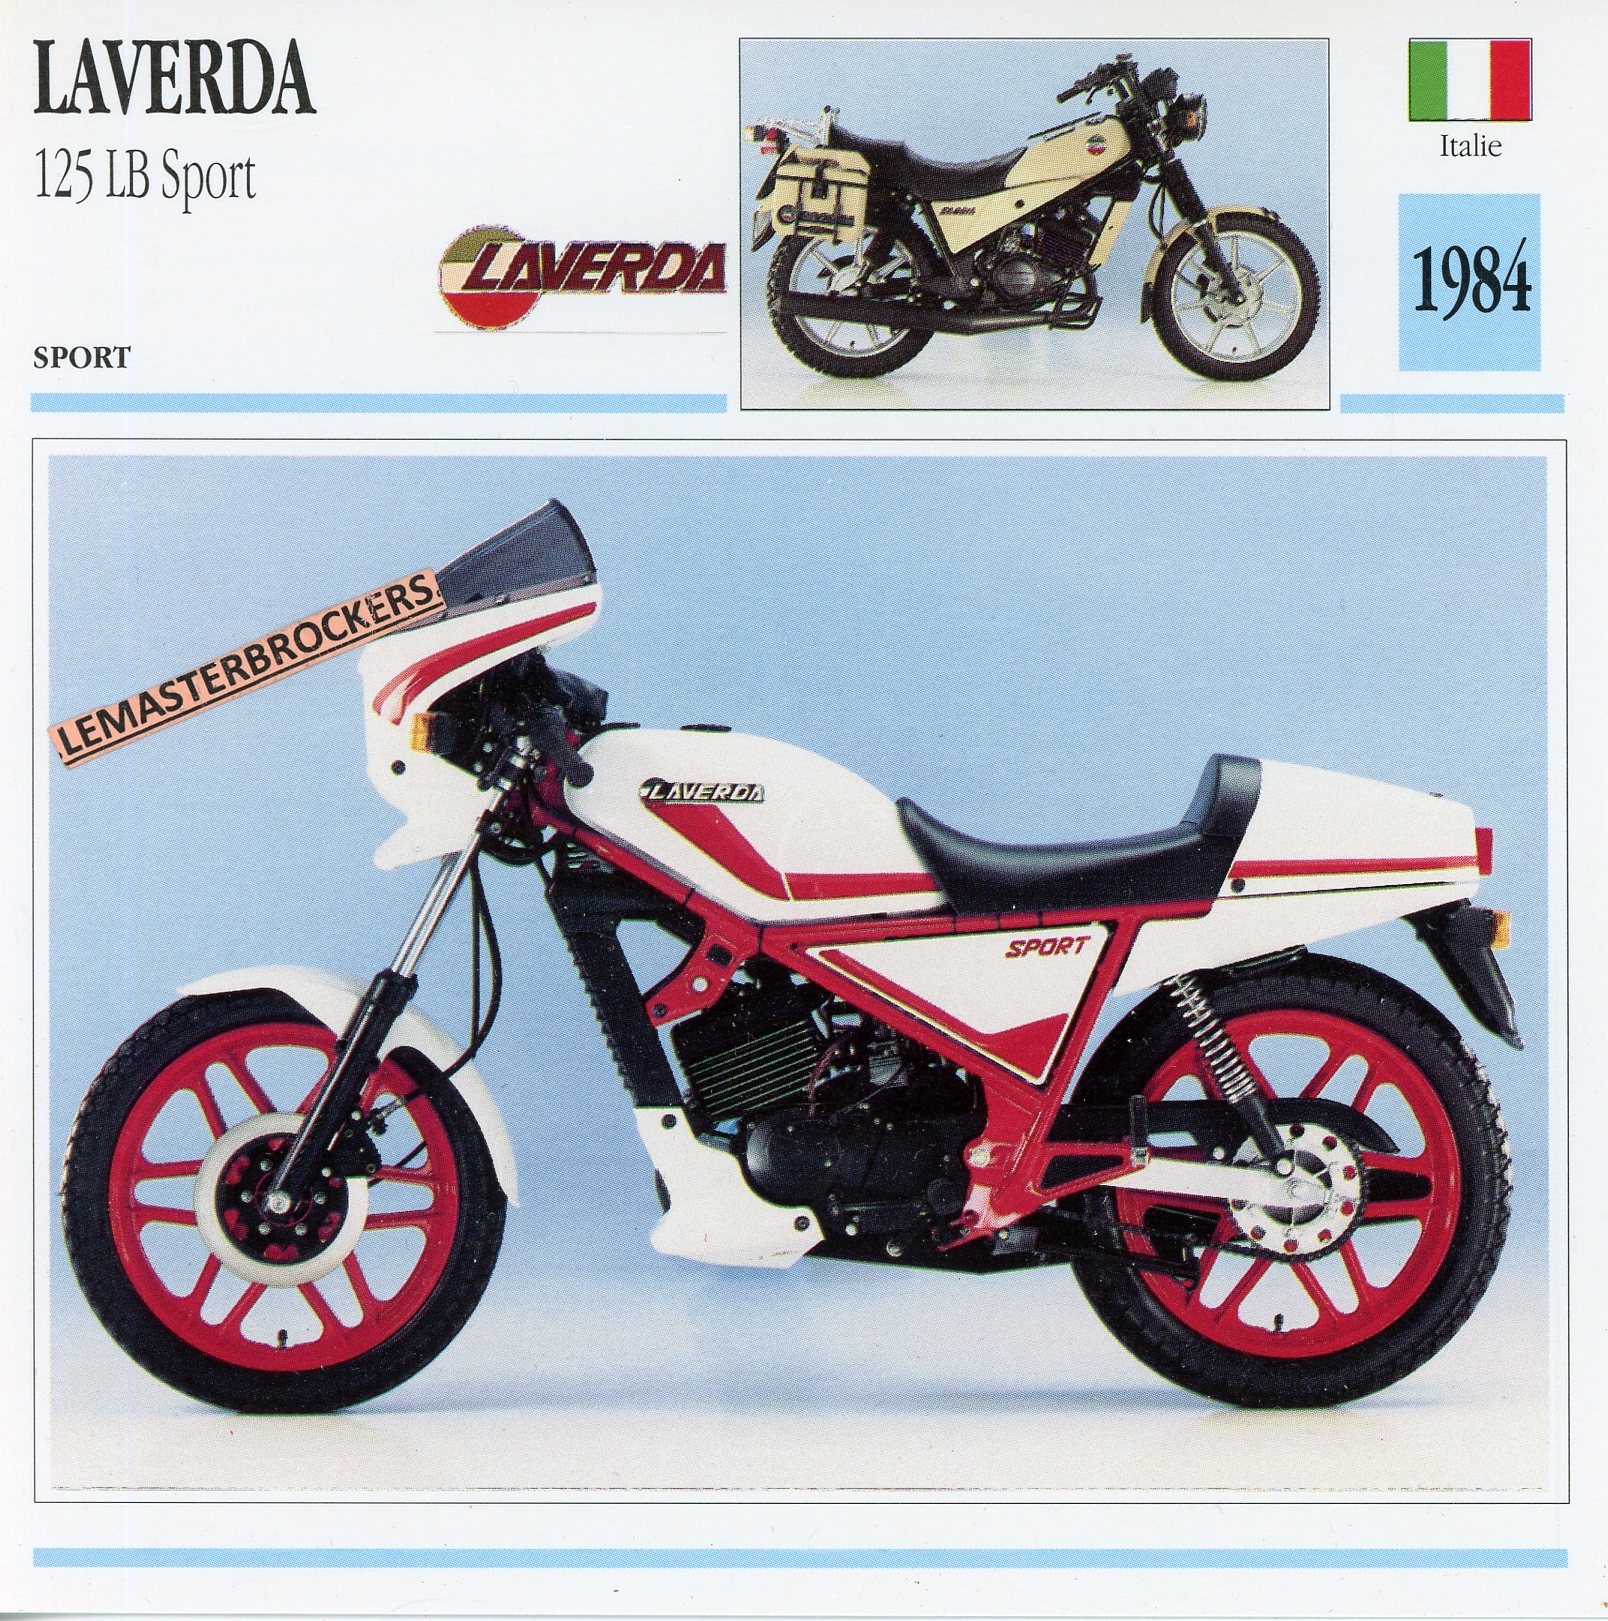 LAVERDA-125-LB-SPORT-1984-LEMASTERBROCKERS-FICHE-MOTO-ATLAS-CARD